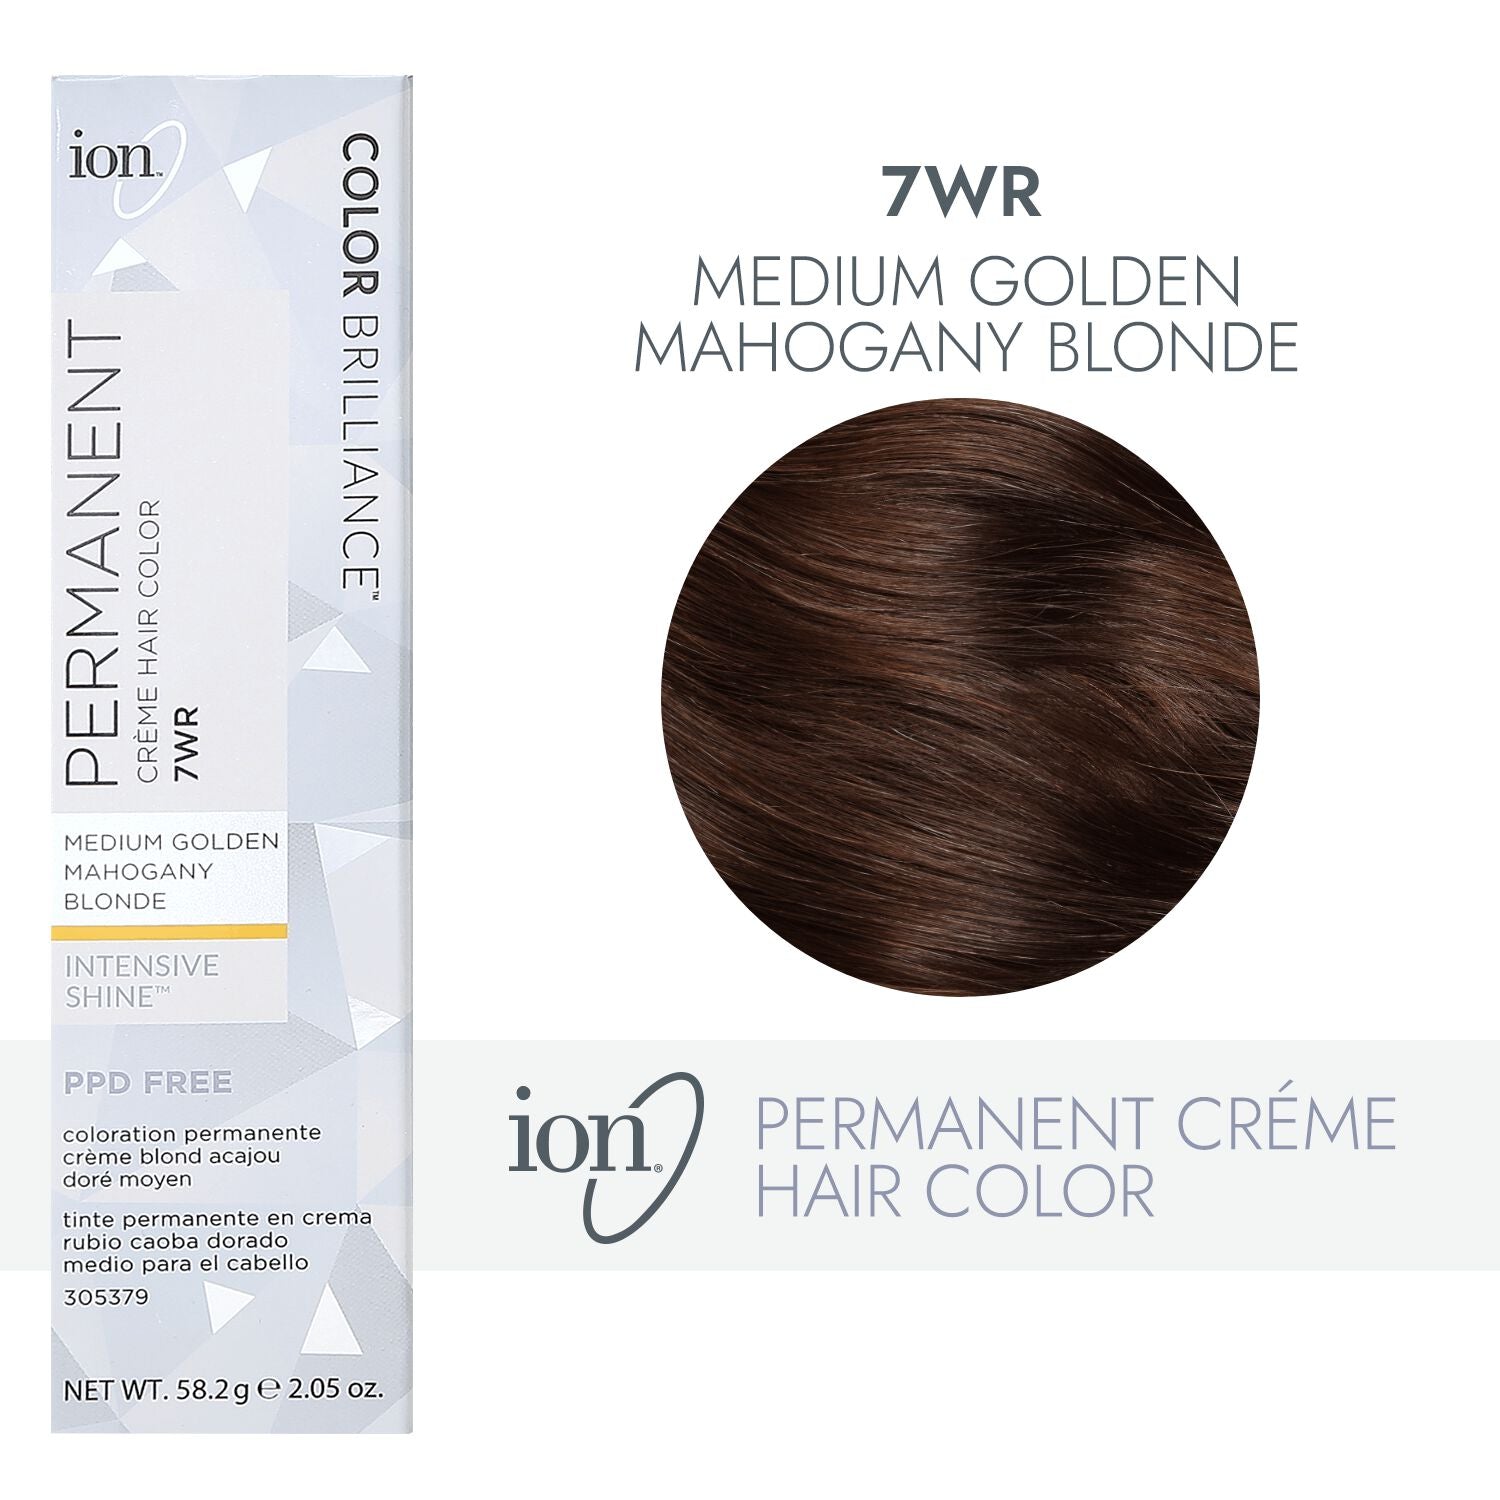 ion 7WR Medium Gold Mahogany Blonde Permanent Creme Hair Color